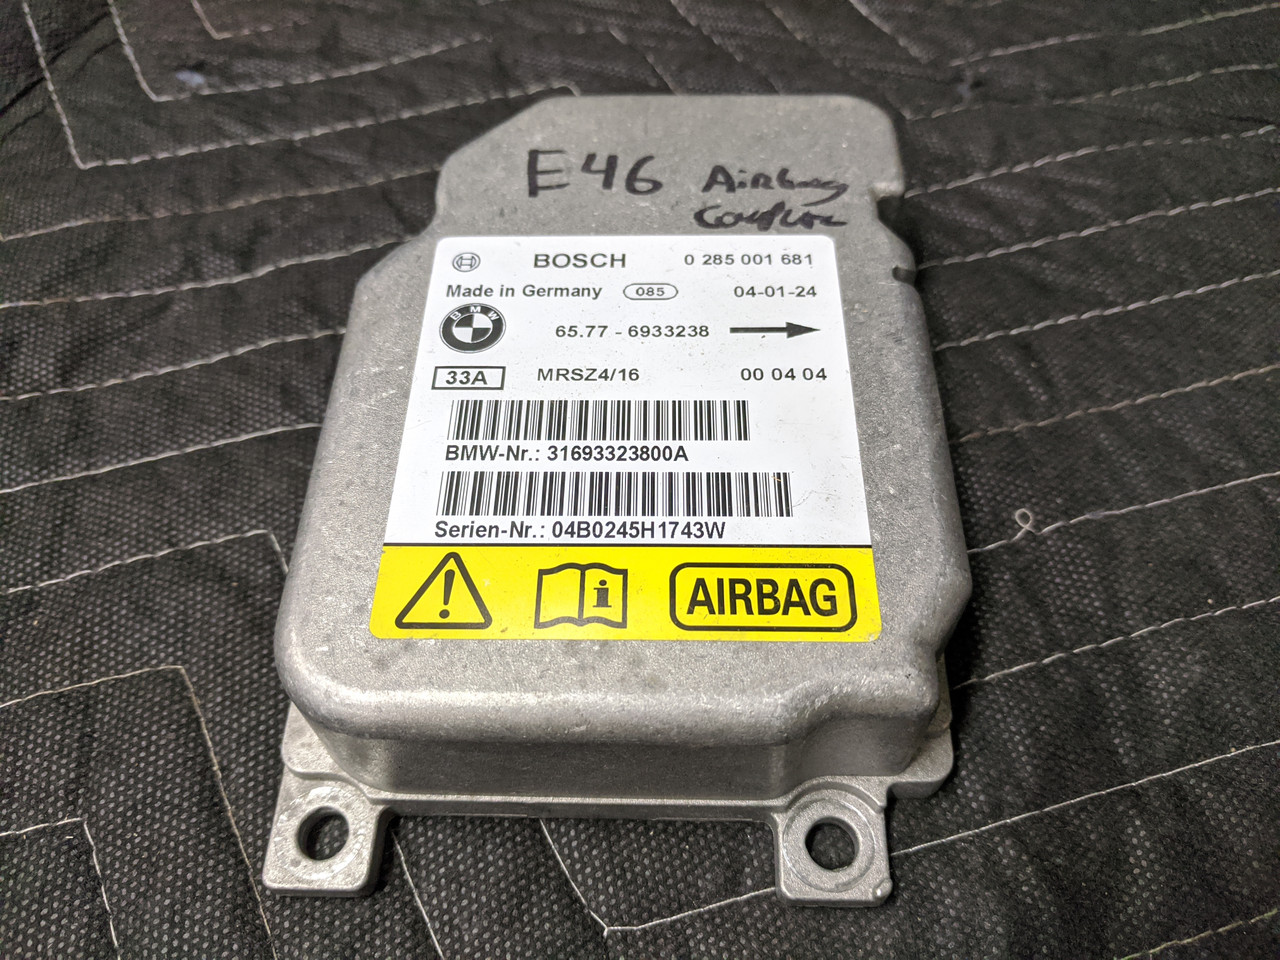 BMW E46 Airbag Control Module 65776933238